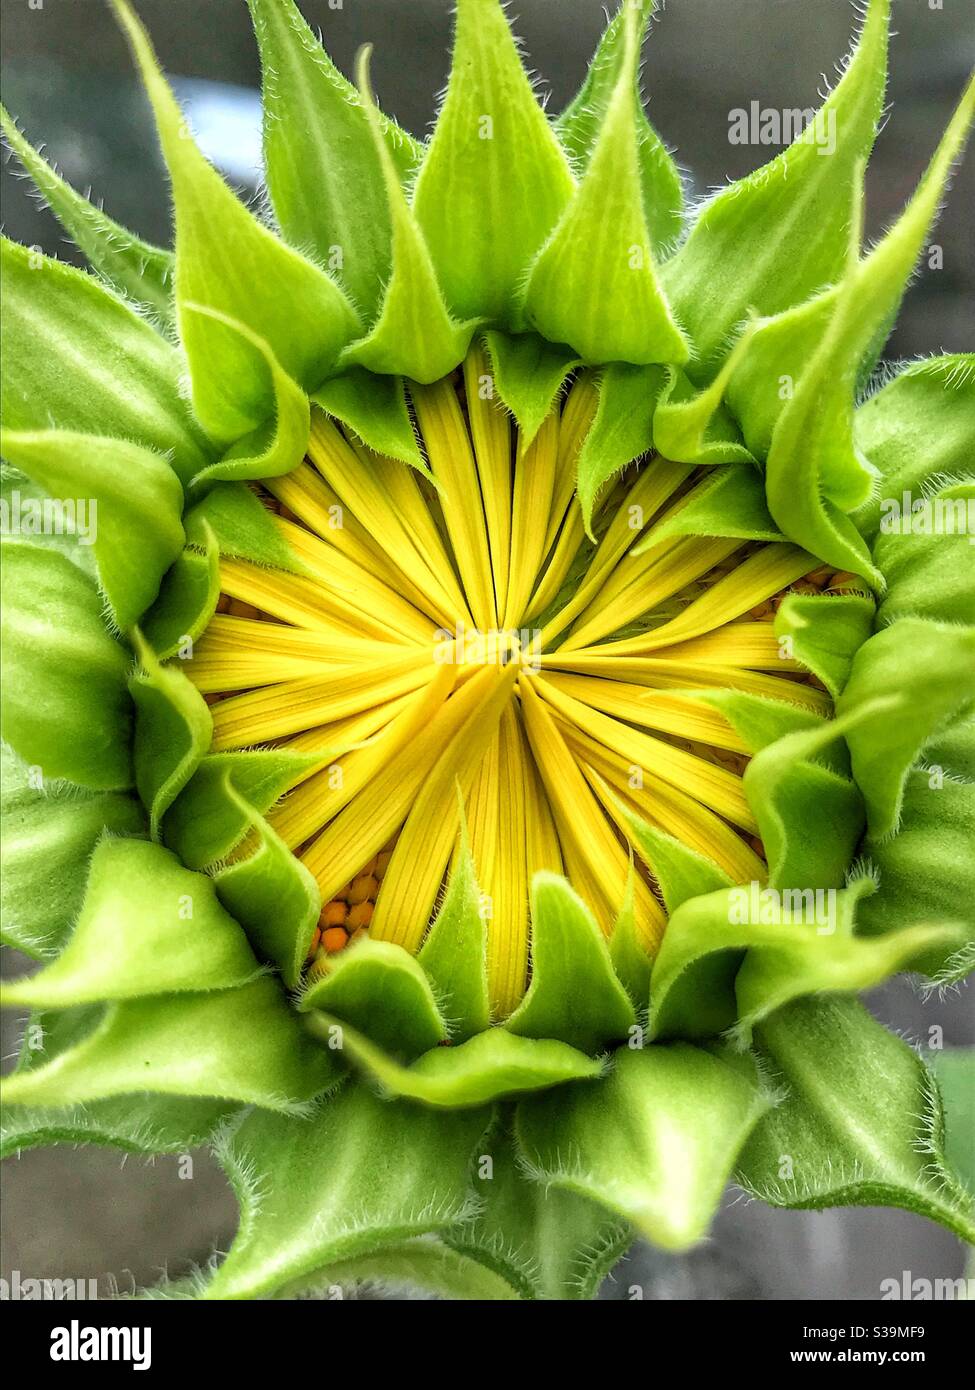 Sunflower just opening Stock Photo